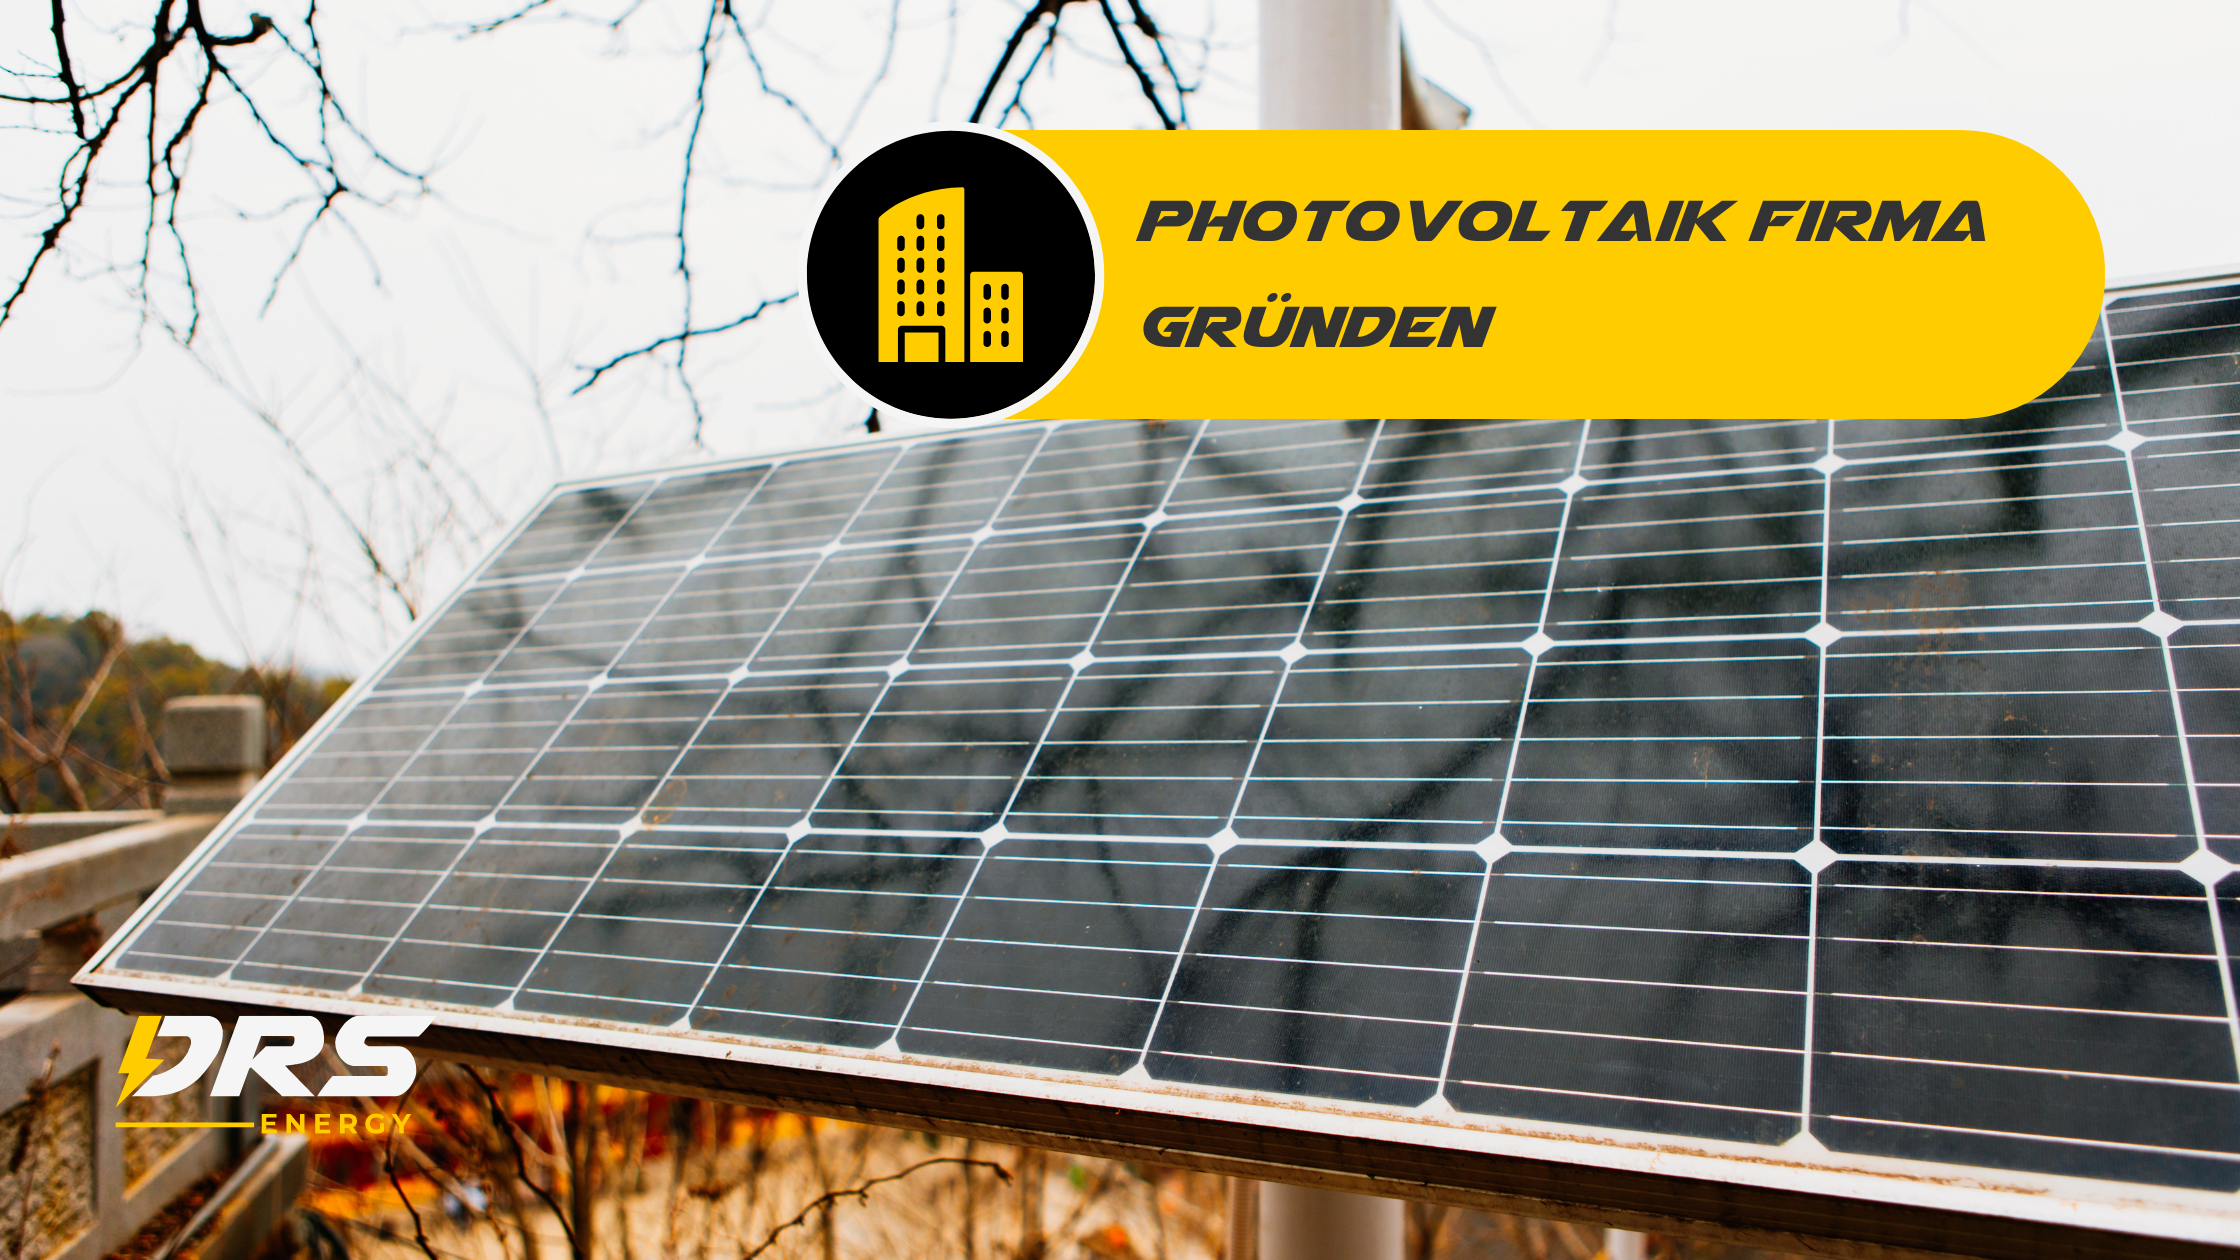 Photovoltaik Firma gründen: Dein 10 Schritte Guide